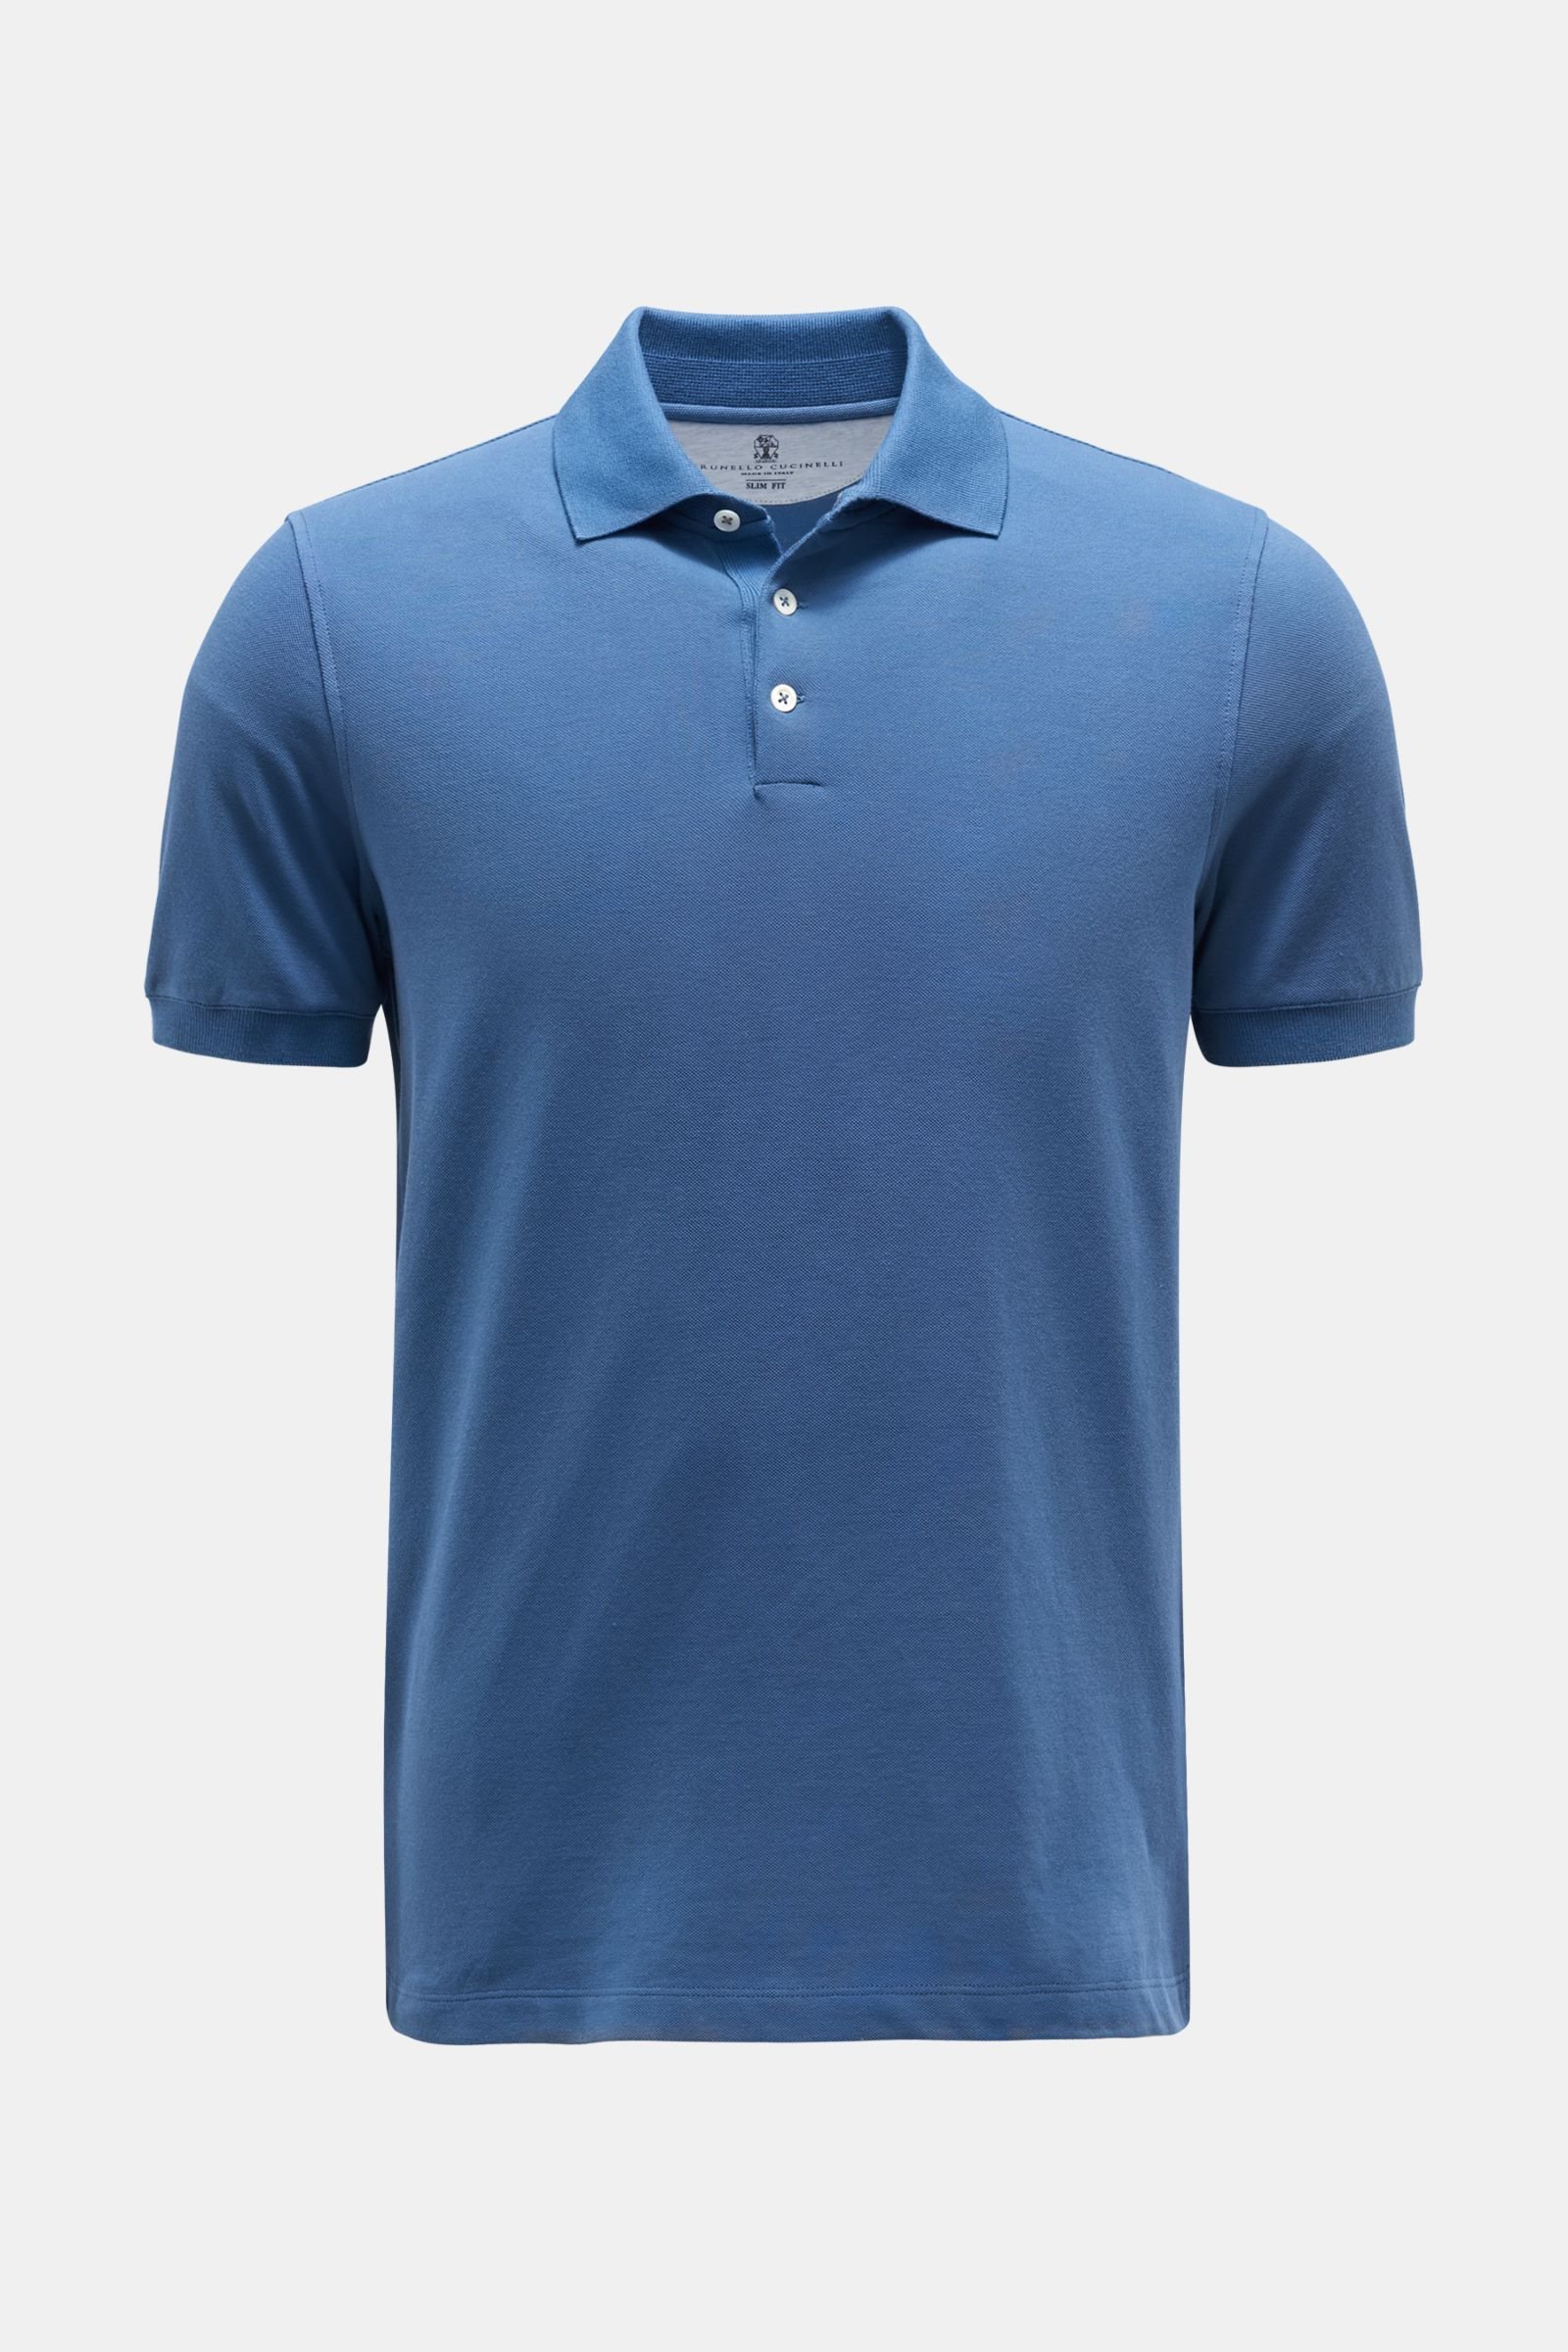 Polo shirt grey-blue